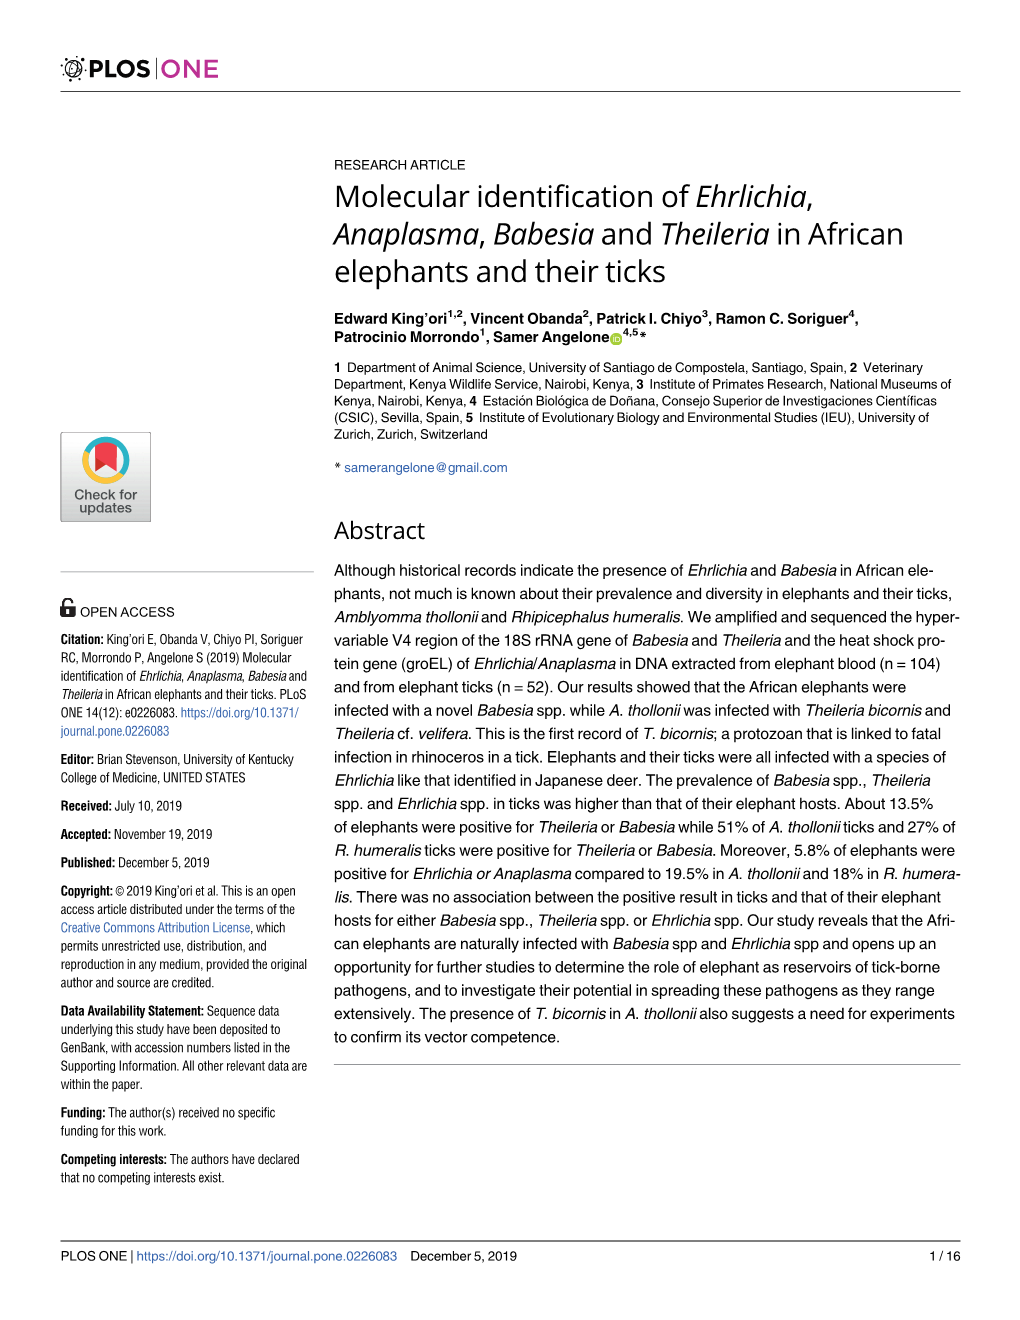 Molecular Identification of Ehrlichia, Anaplasma, Babesia and Theileria in African Elephants and Their Ticks